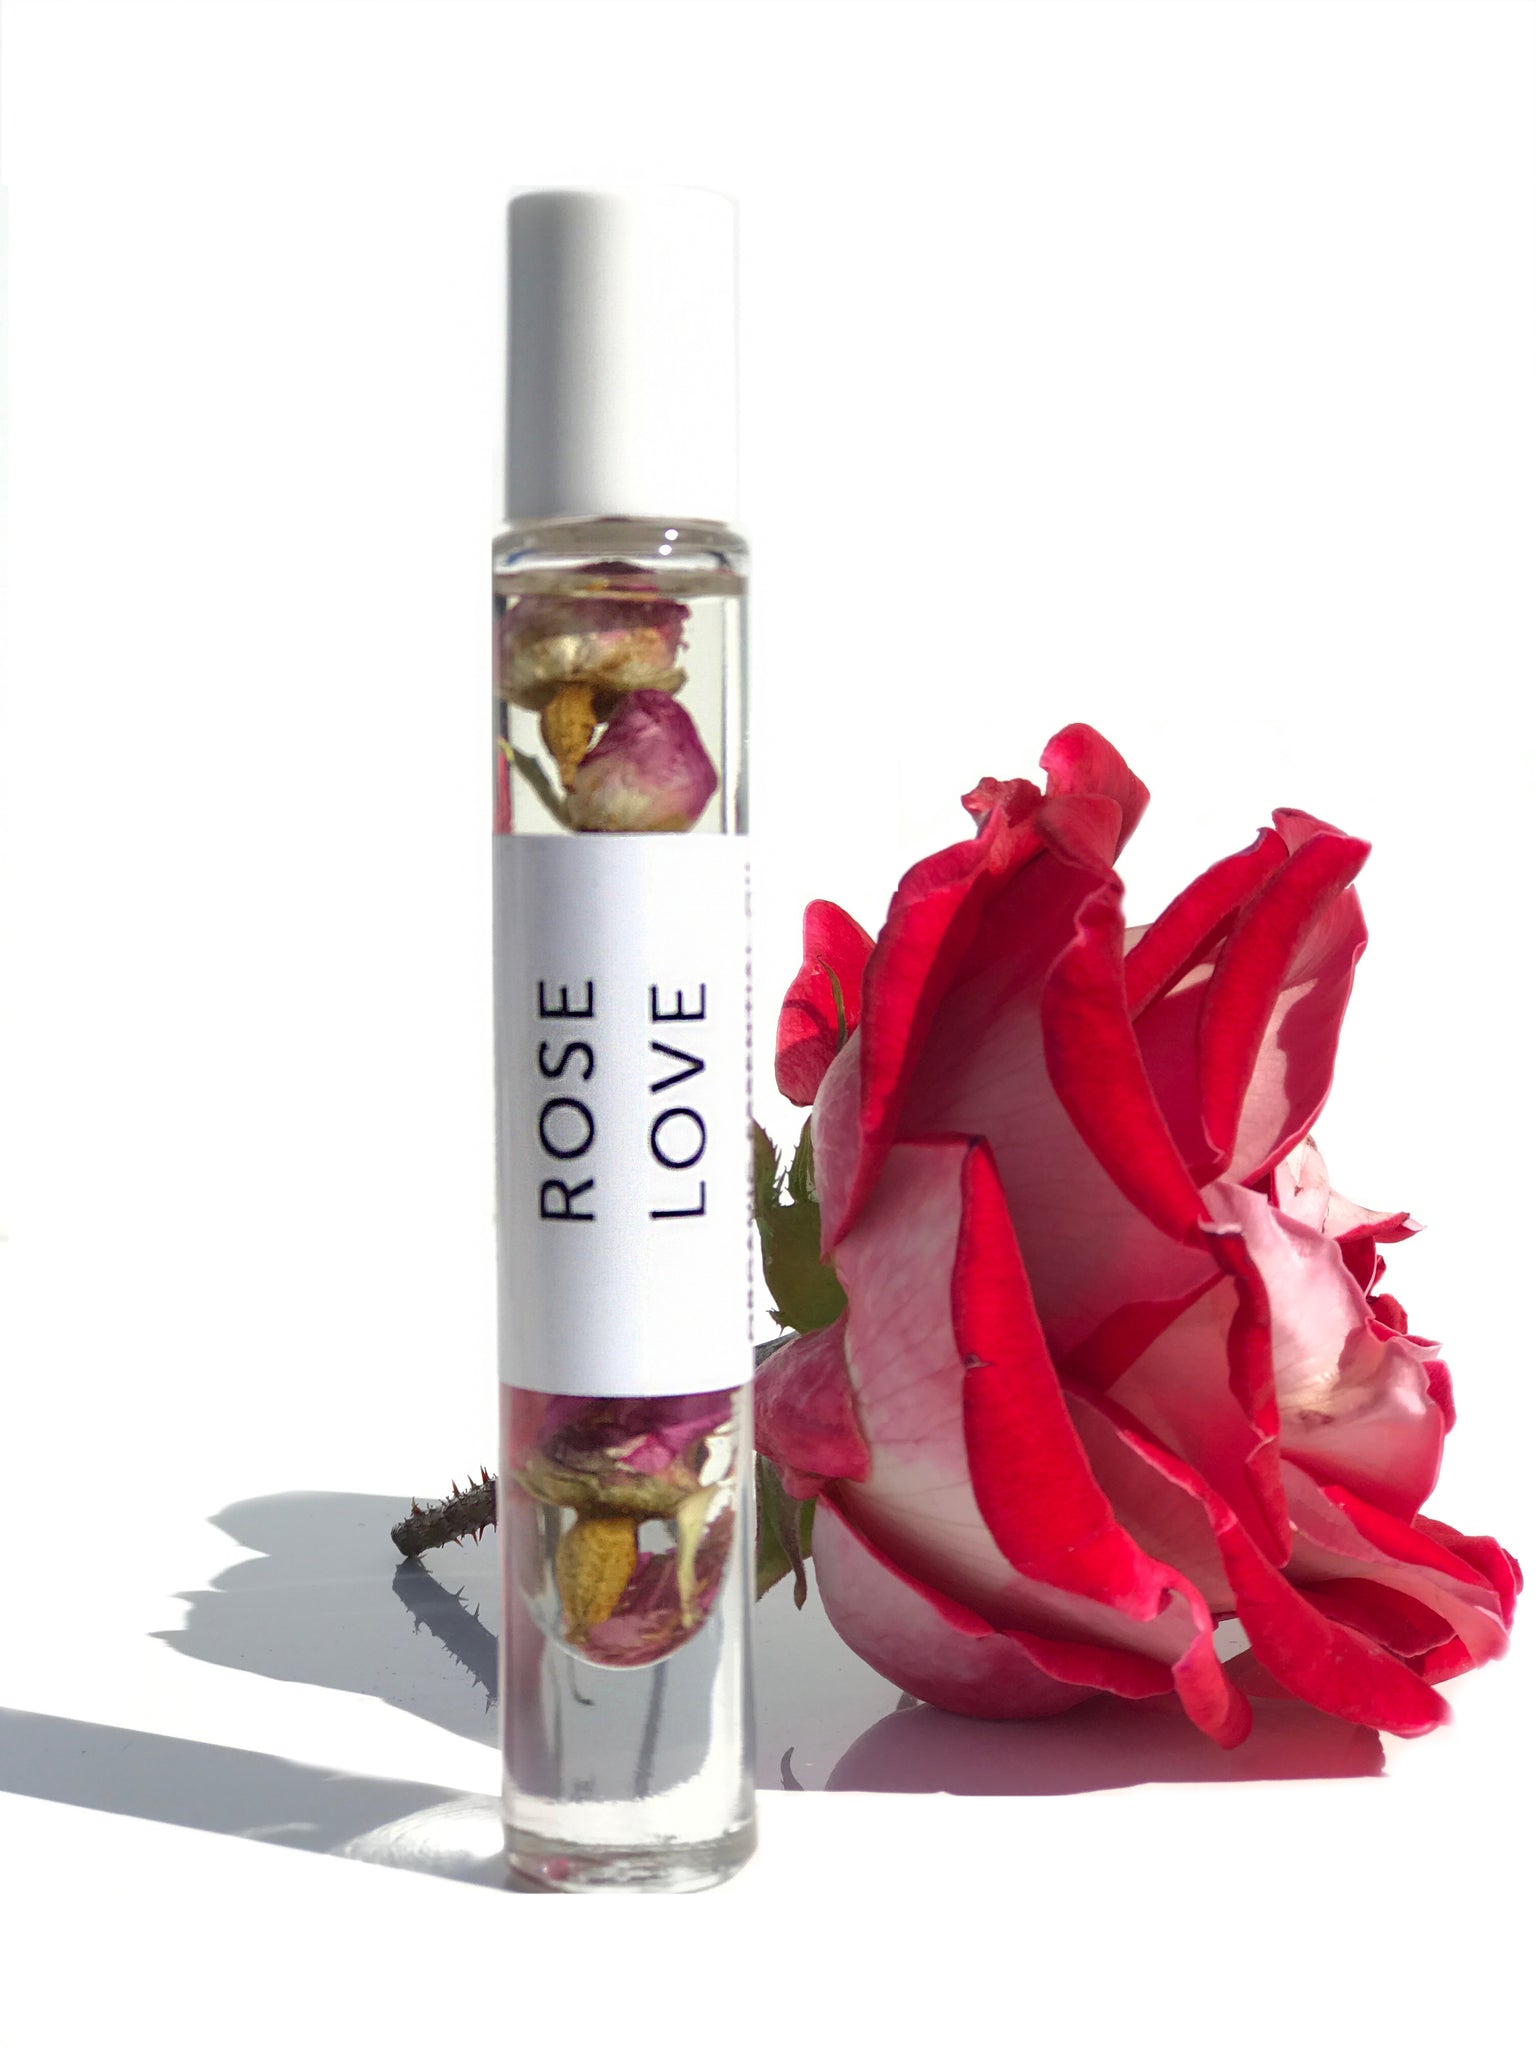 Wild Jasmine Roll-on Perfume Oil  Hydra Bloom – Hydra Bloom Beauty USA